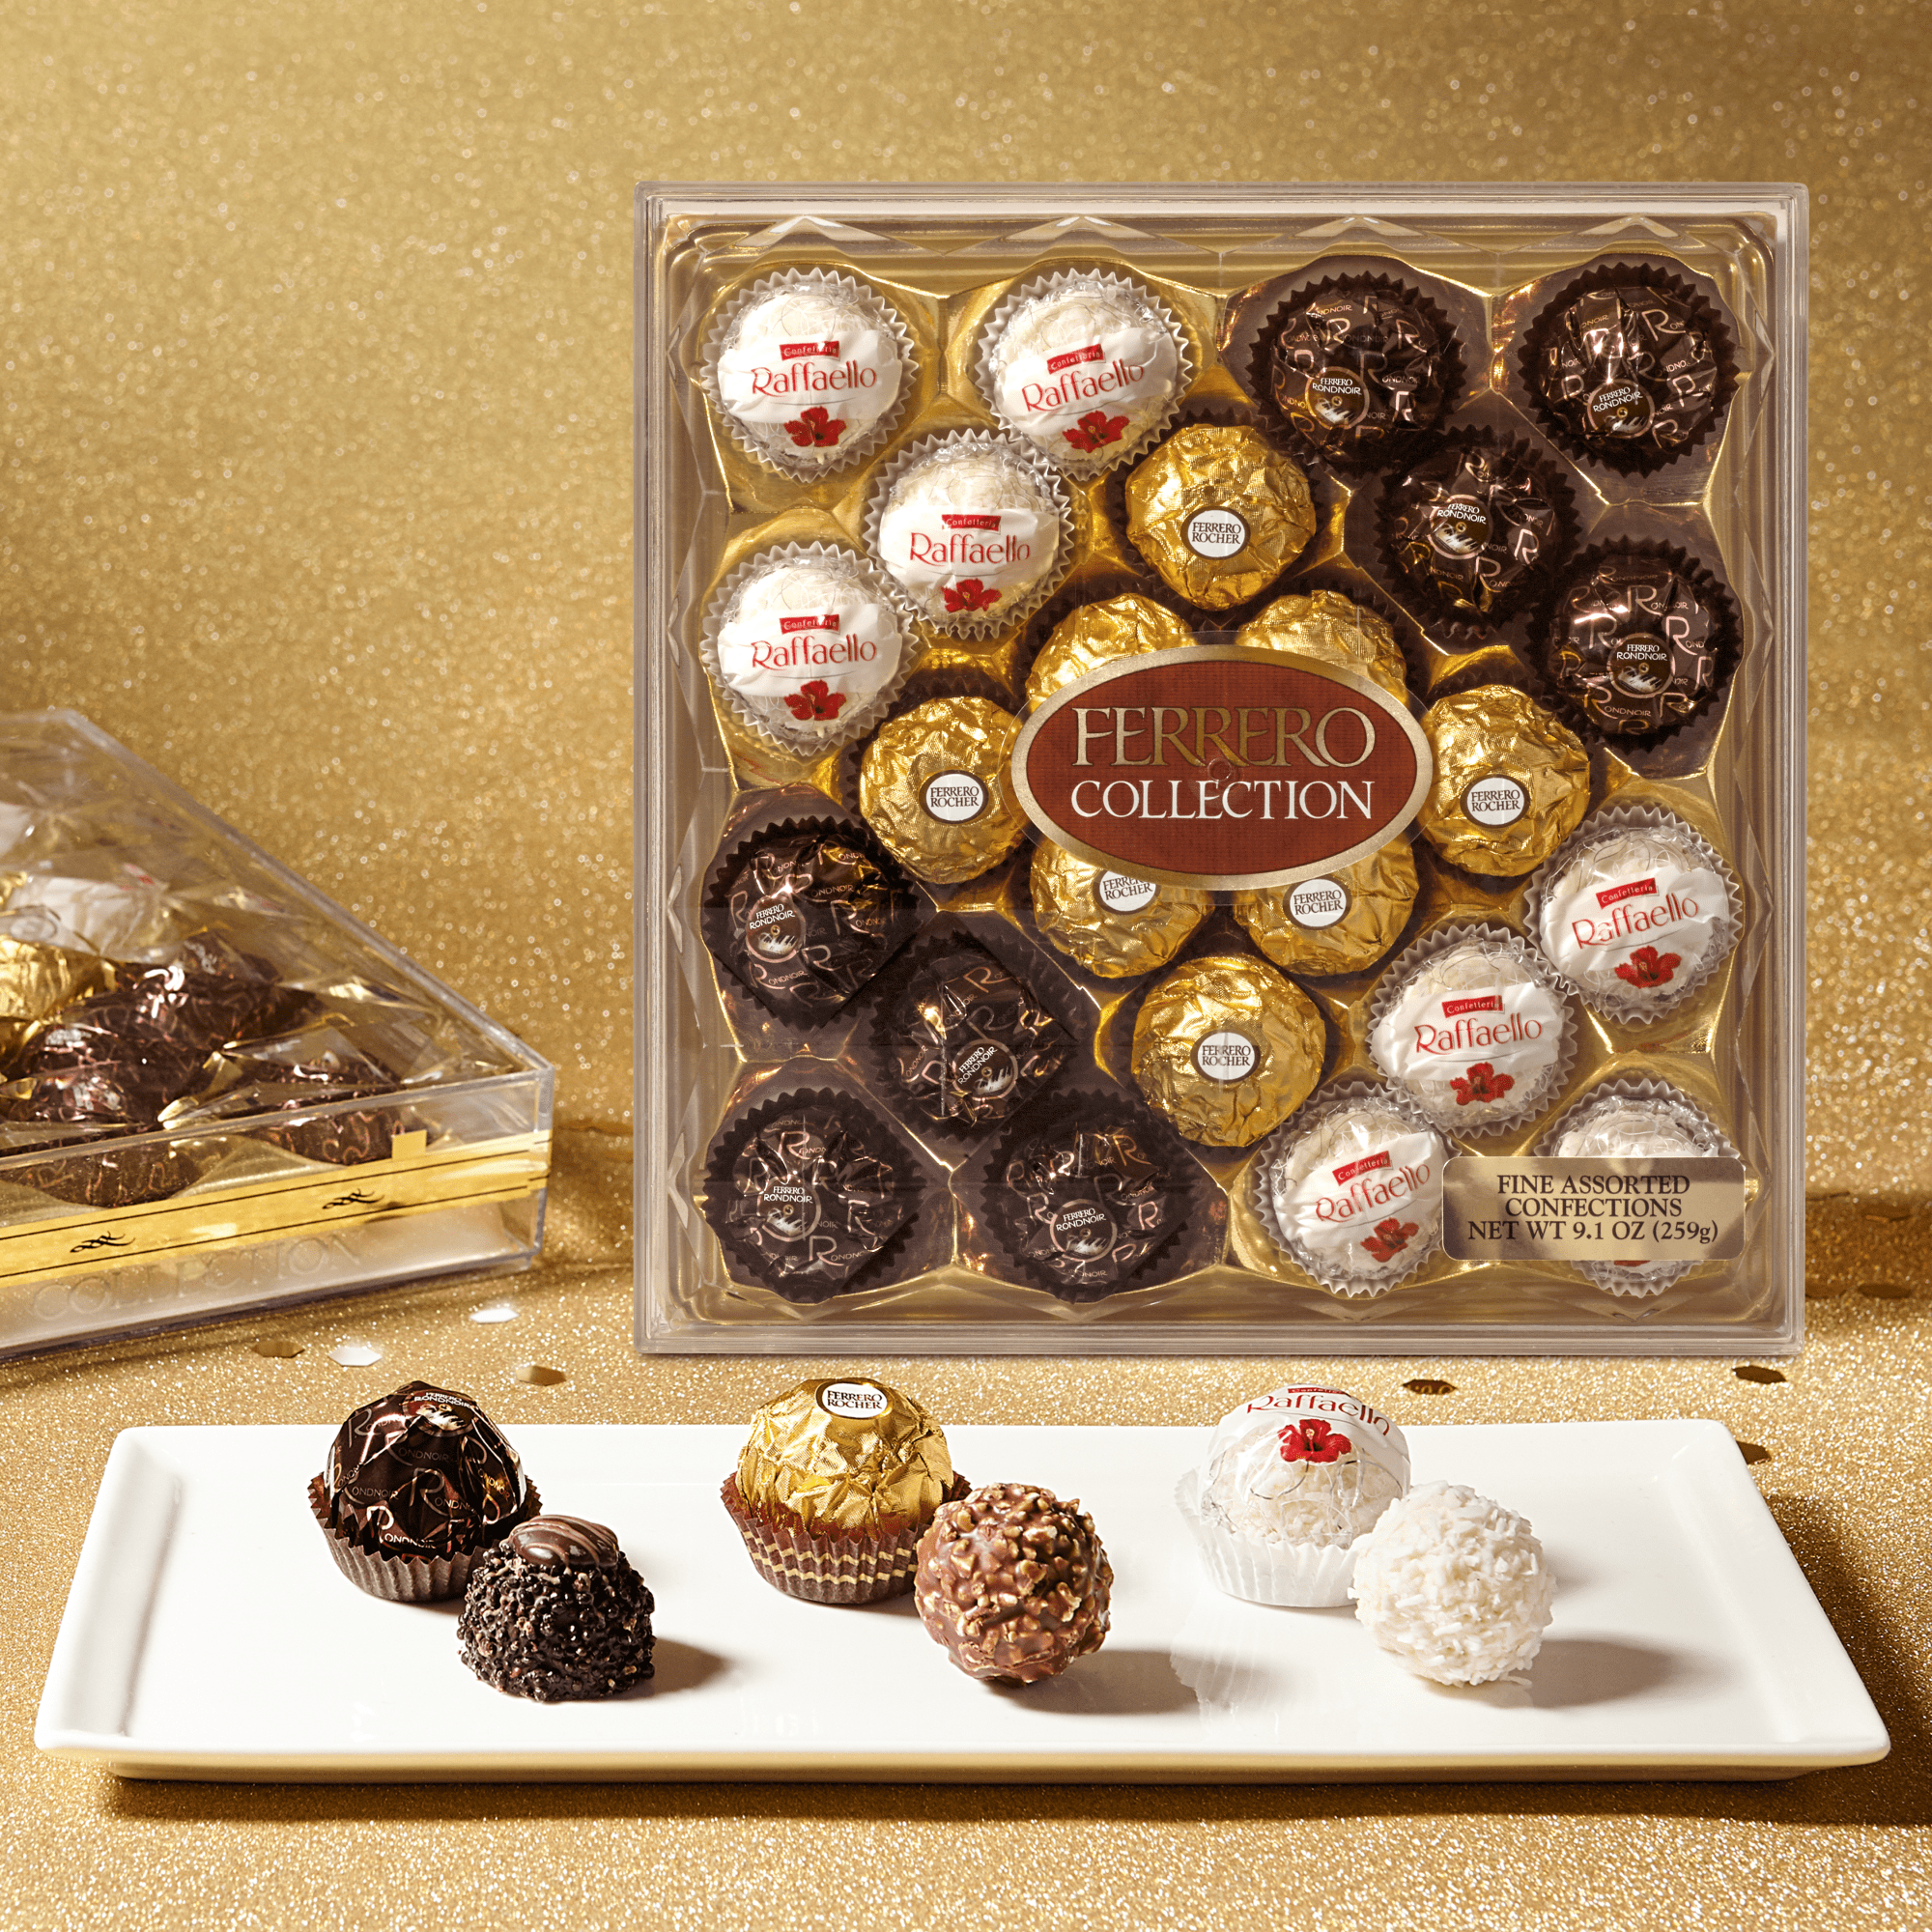 Ferrero Collection, Milk and Dark Chocolate and Coconut, Luxury Chocolate Gift Box, 32 Ct - image 5 of 11